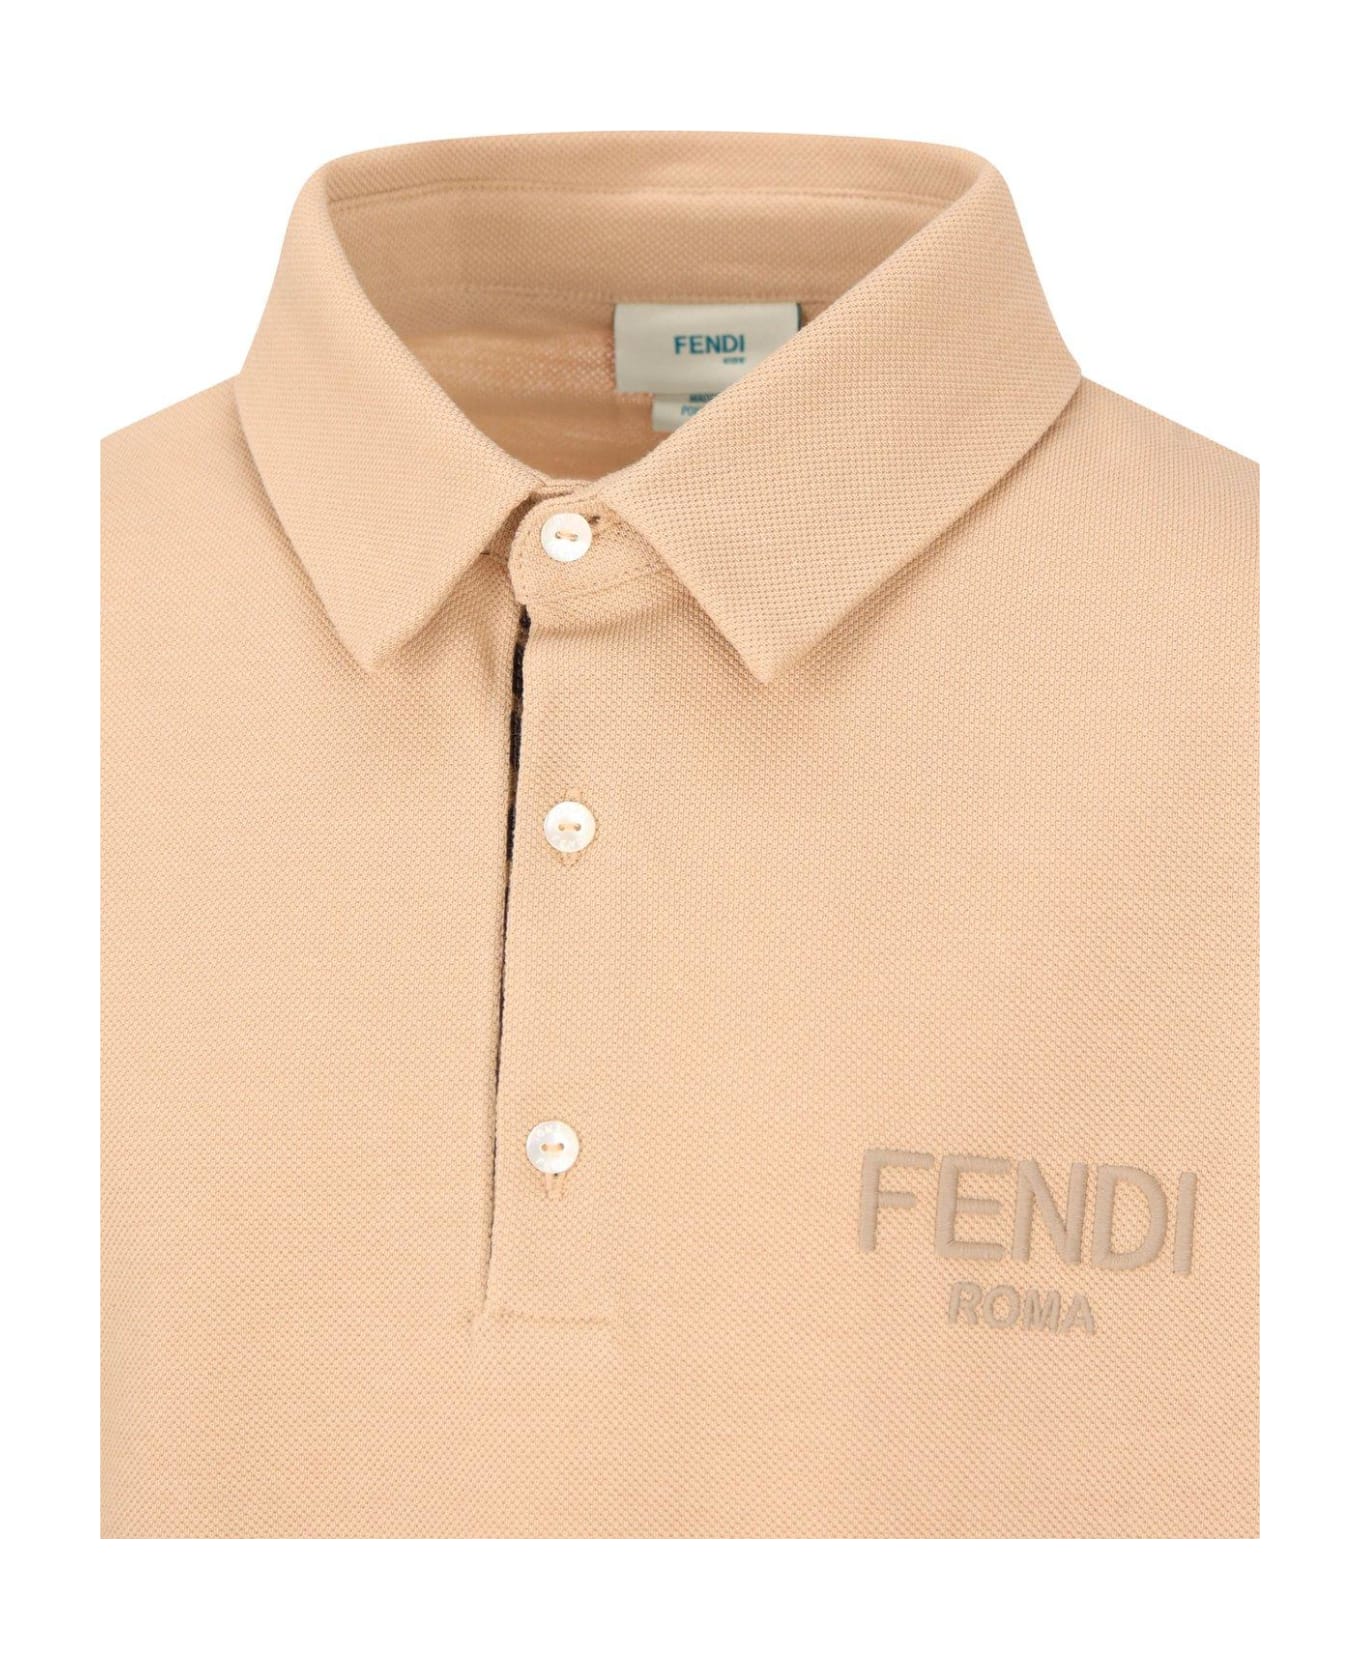 Fendi Logo Embroidered Polo Shirt - Beige